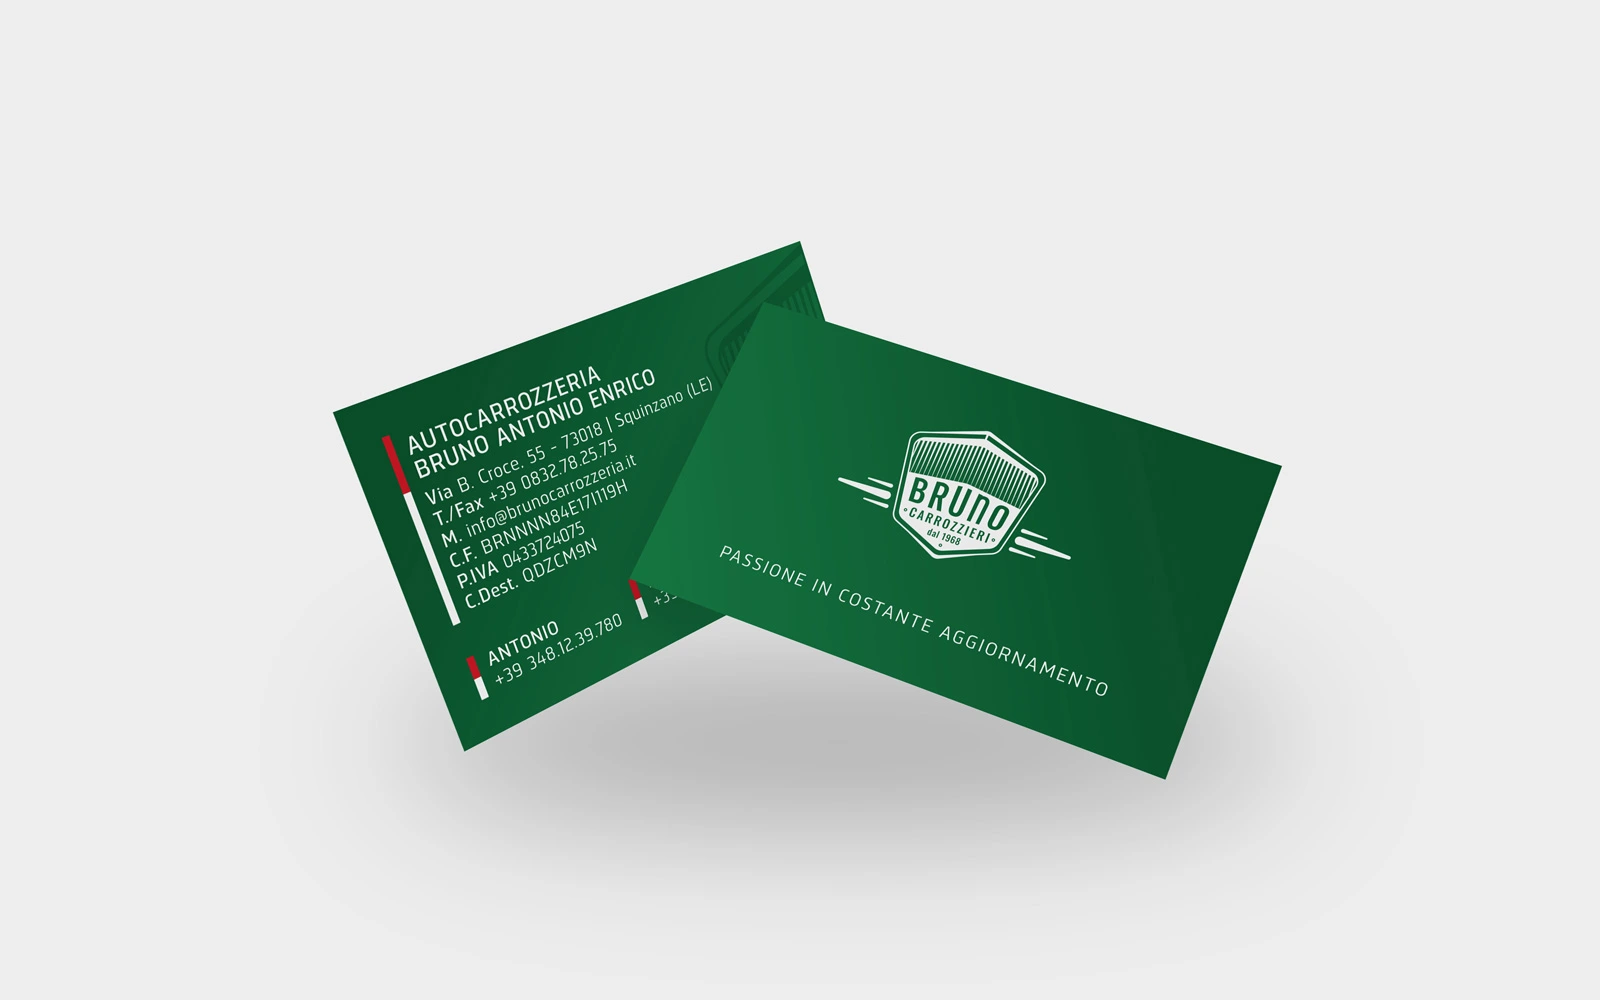 BRUNO_businesscard